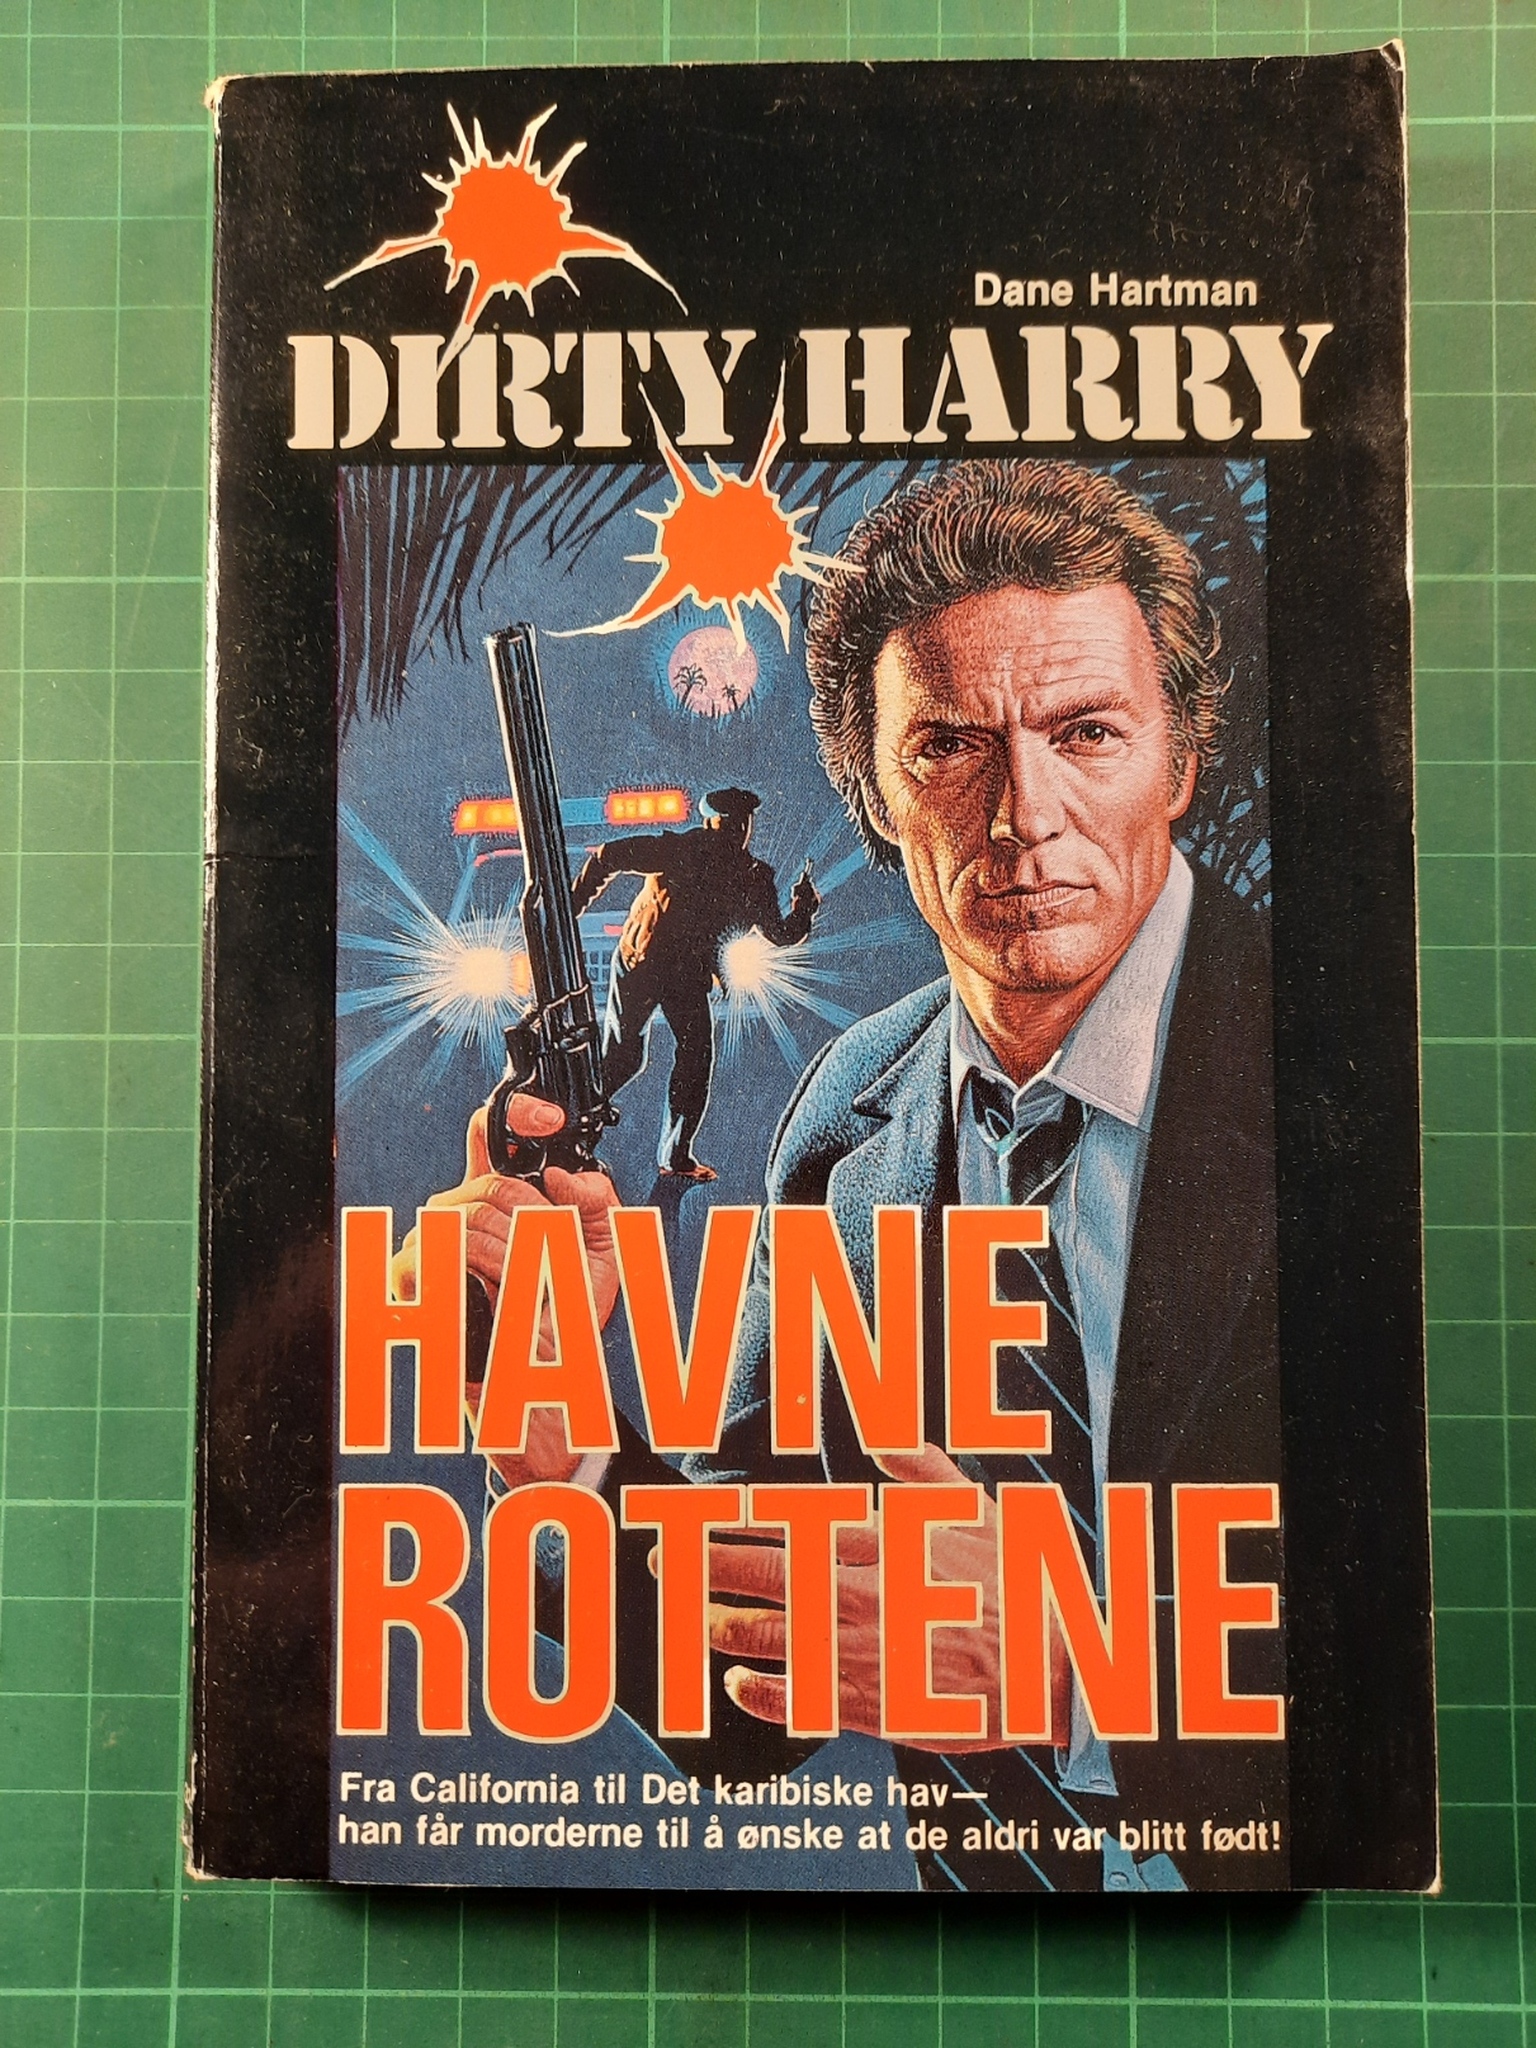 Dirty Harry : Havnerottene